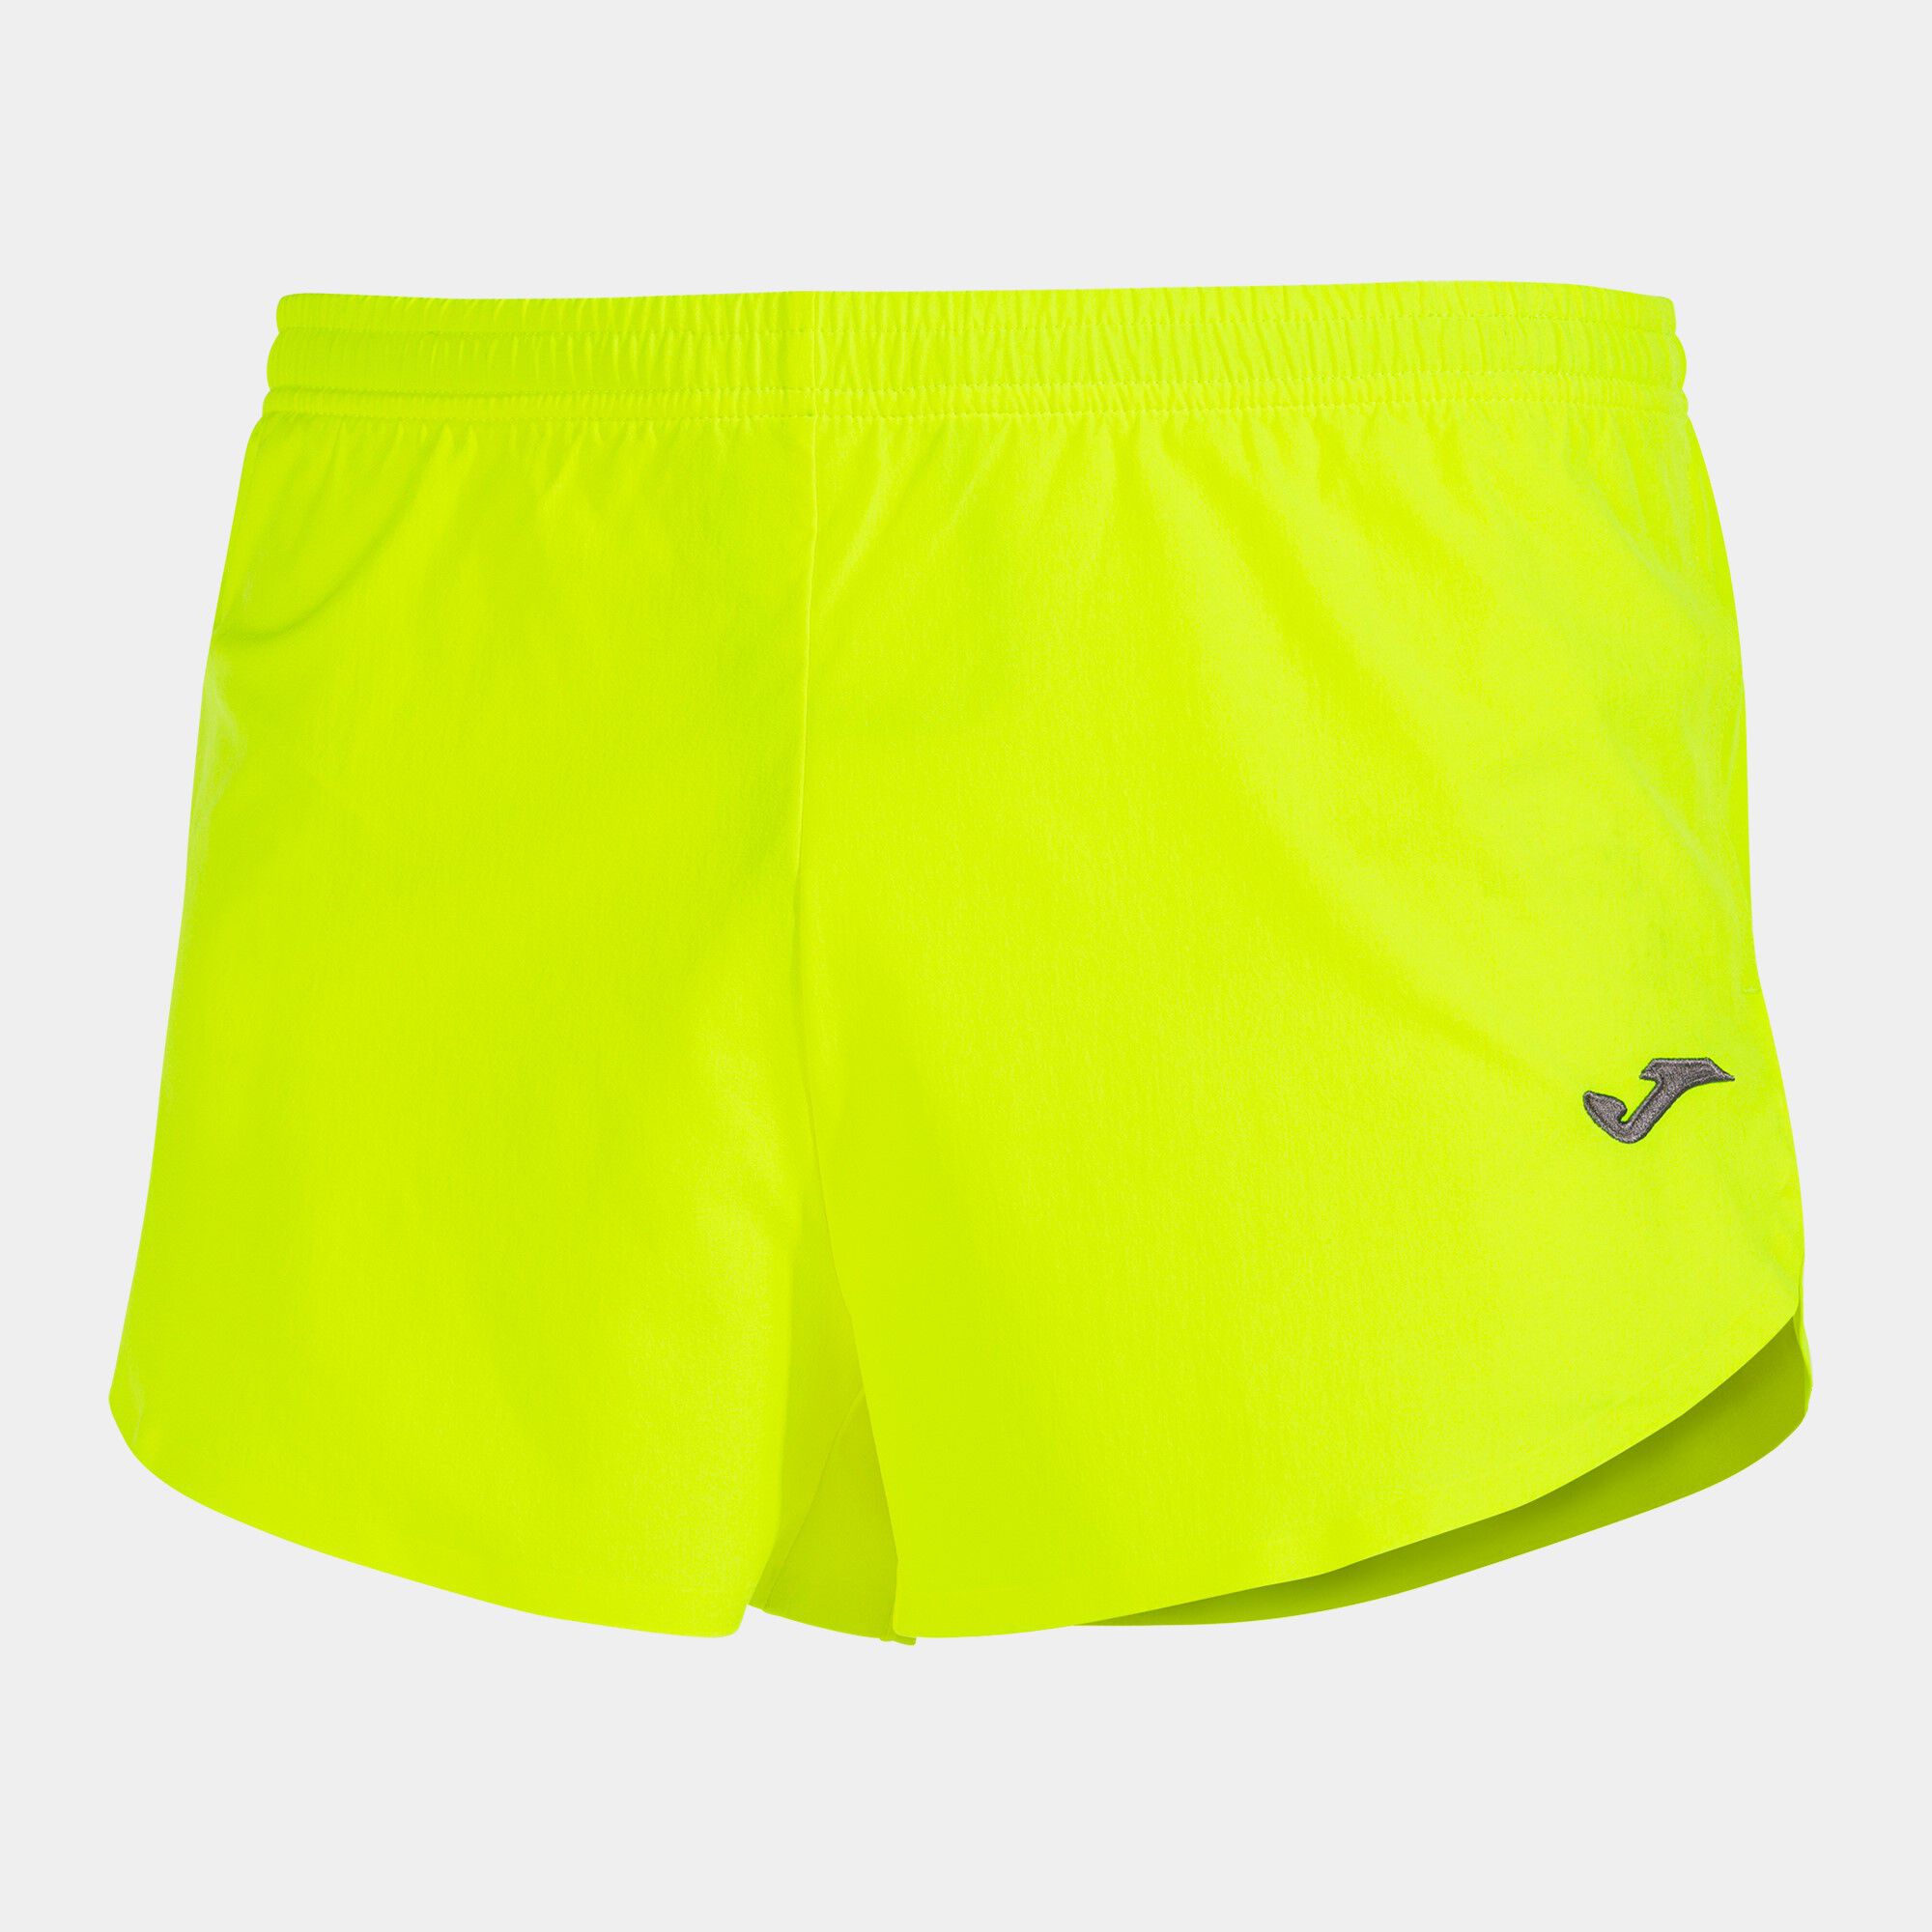 Shorts man Olimpia fluorescent yellow